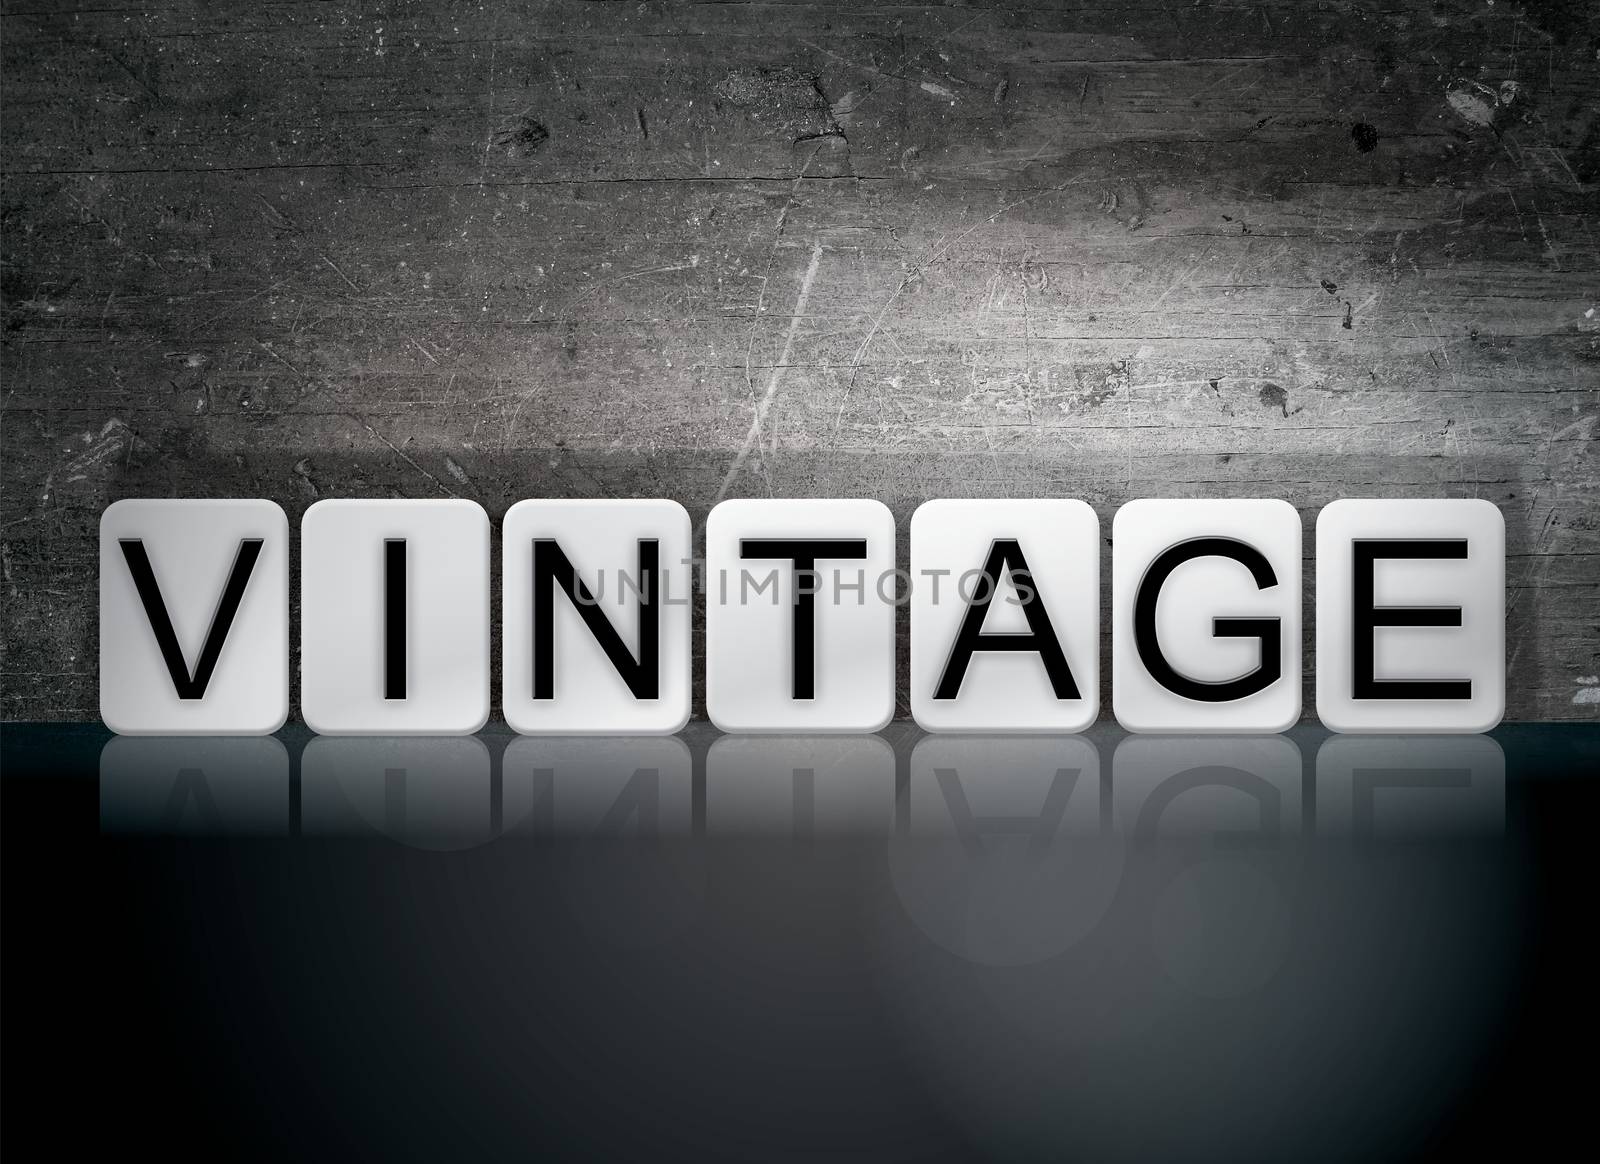 The word "Vintage" written in white tiles against a dark vintage grunge background.